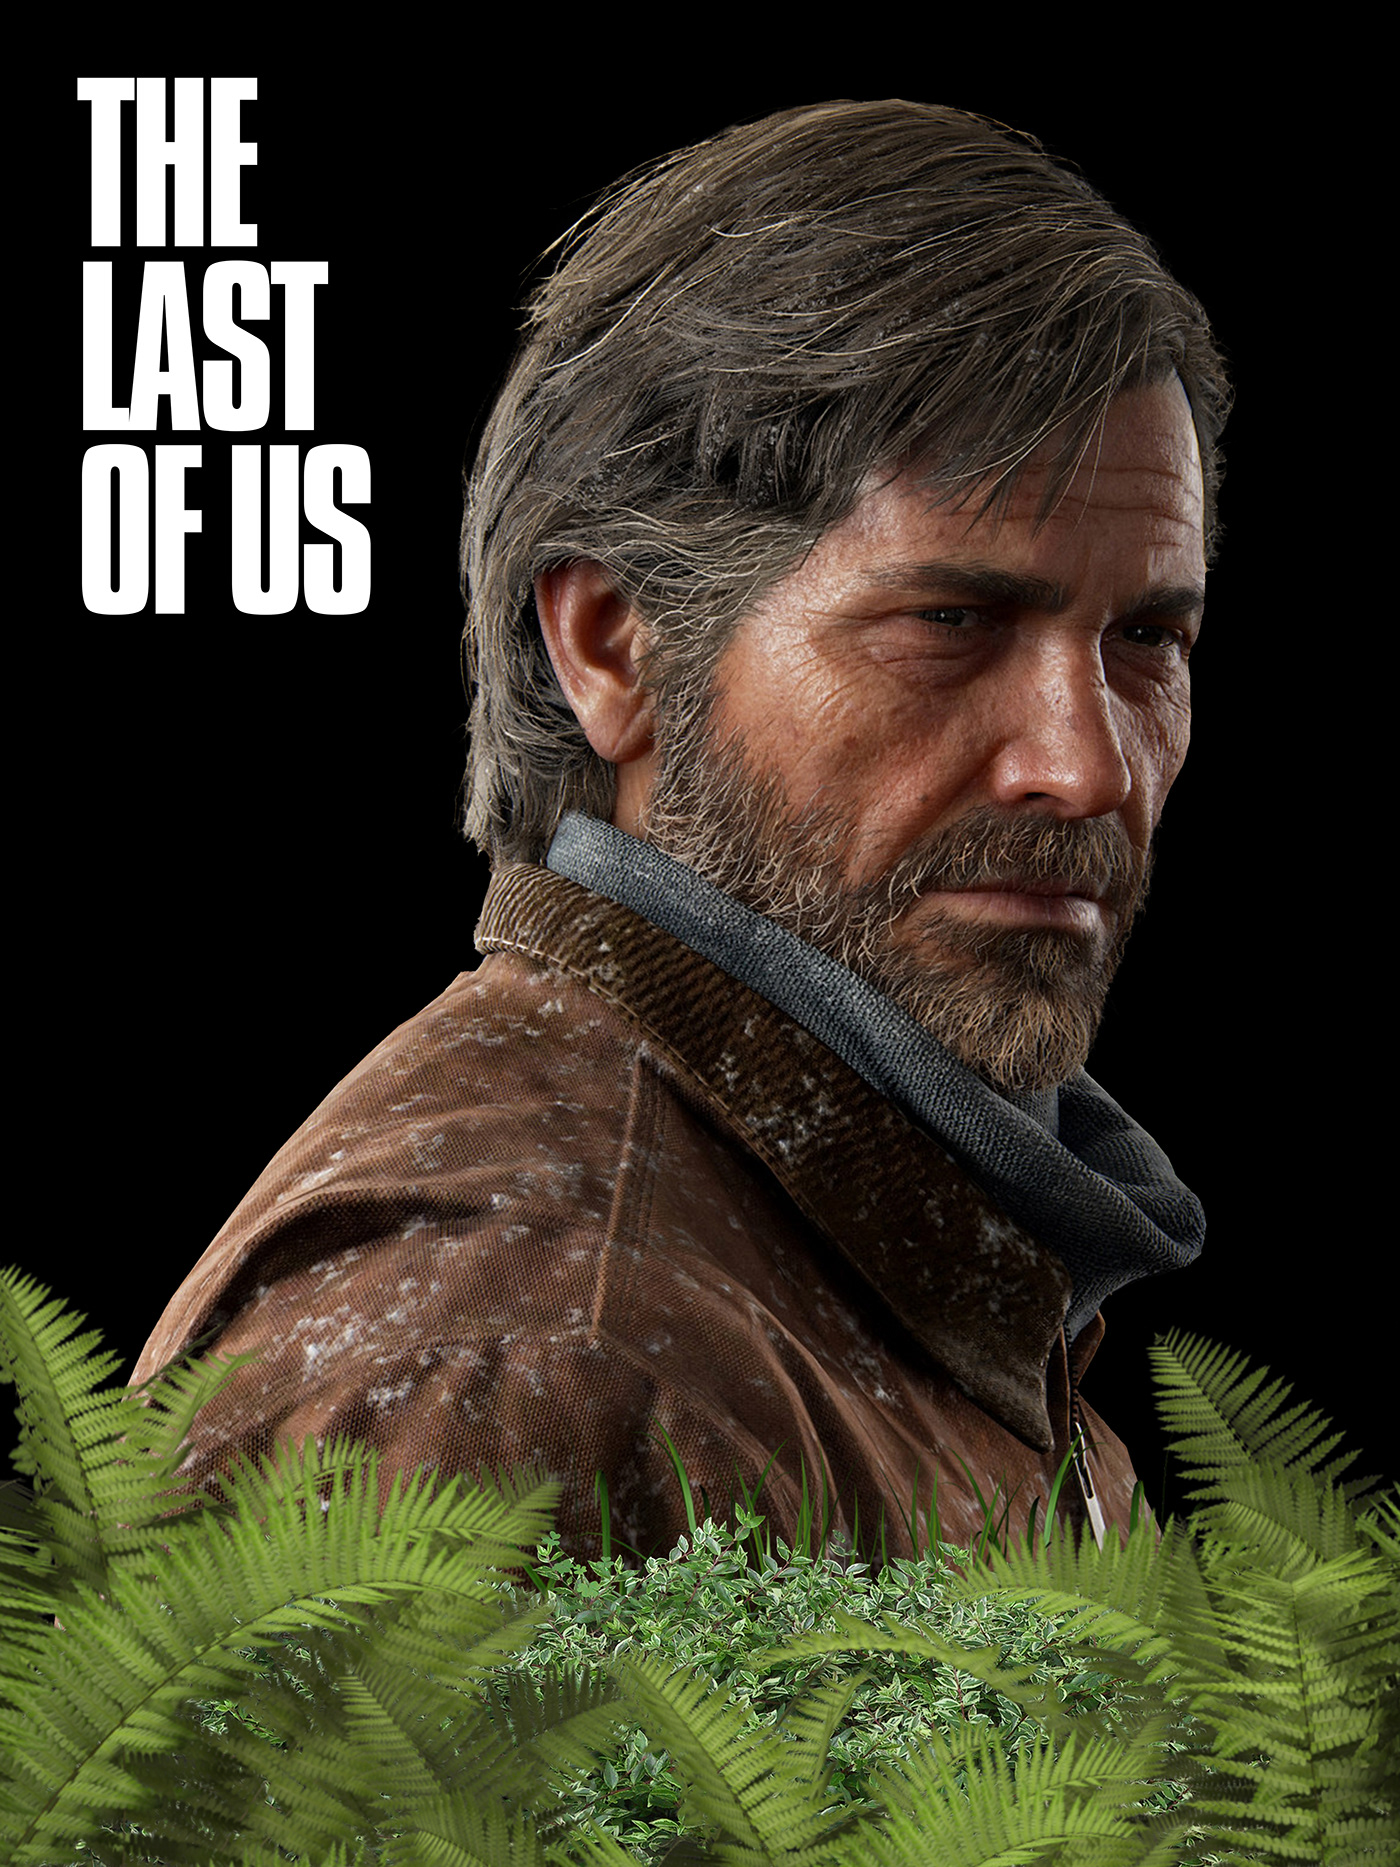 The Last of Us Digital Art  joel miller graphic design  Photo Manipulation  poster Poster Design photoshop